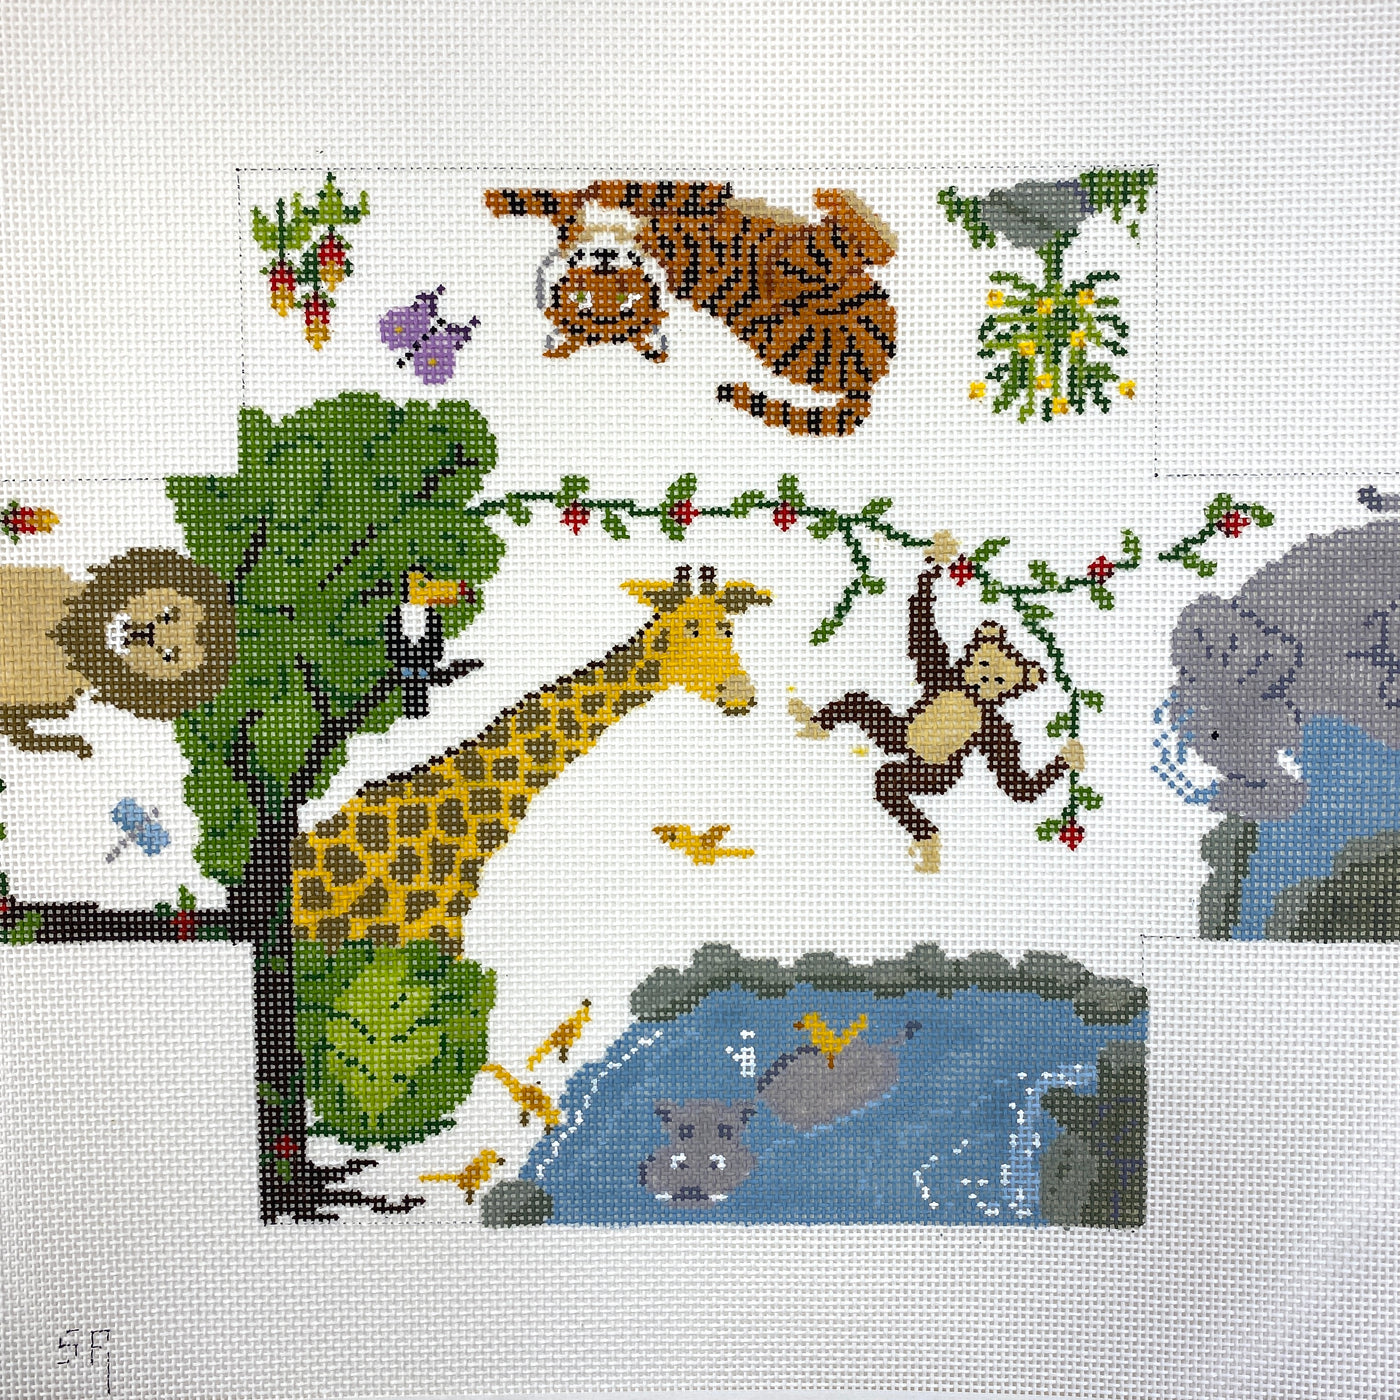 Children's Animals Brick Cover Needlepoint Canvas